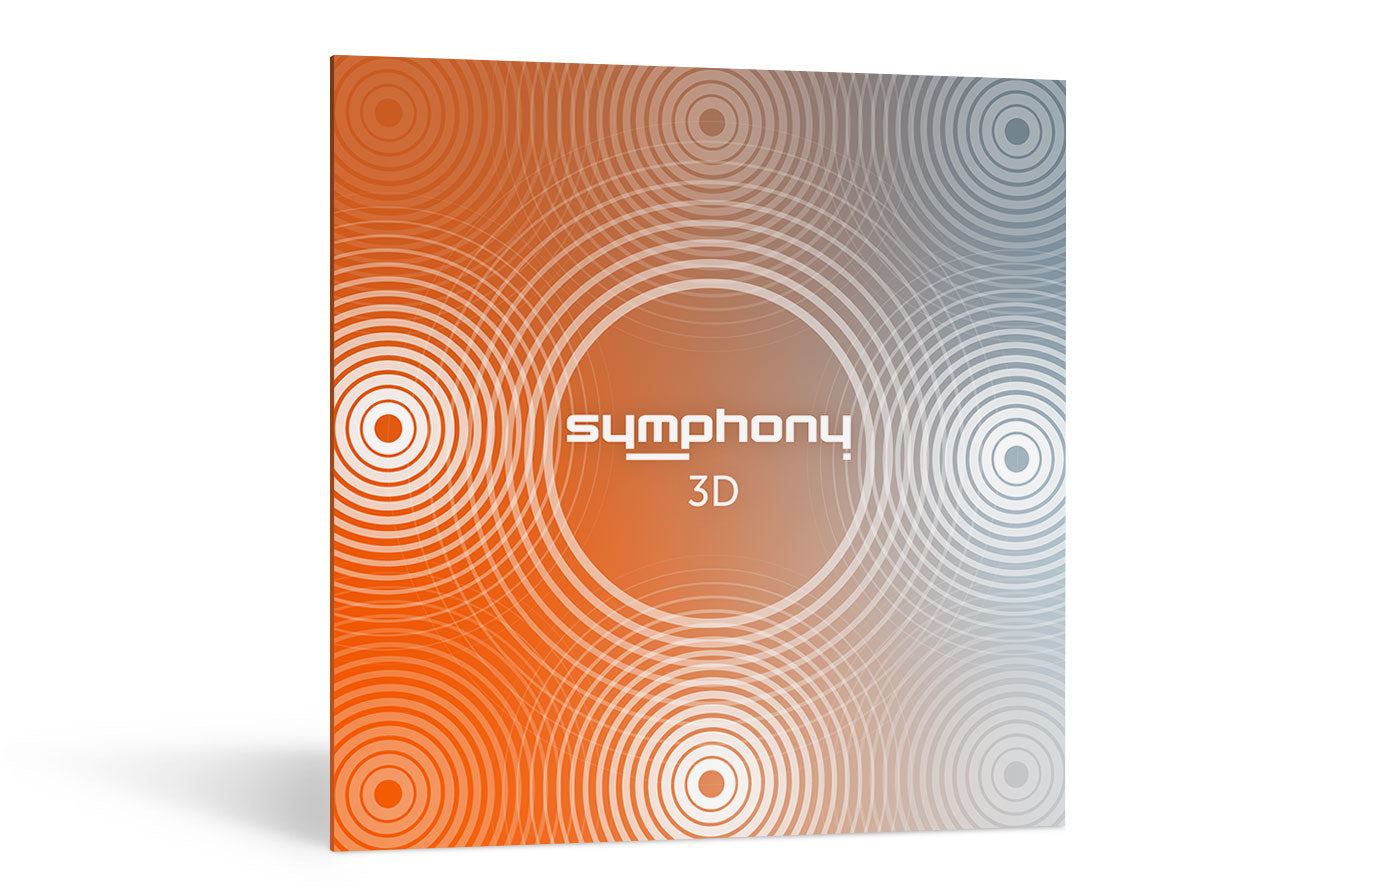 iZotope | Exponential Audio: Symphony 3D